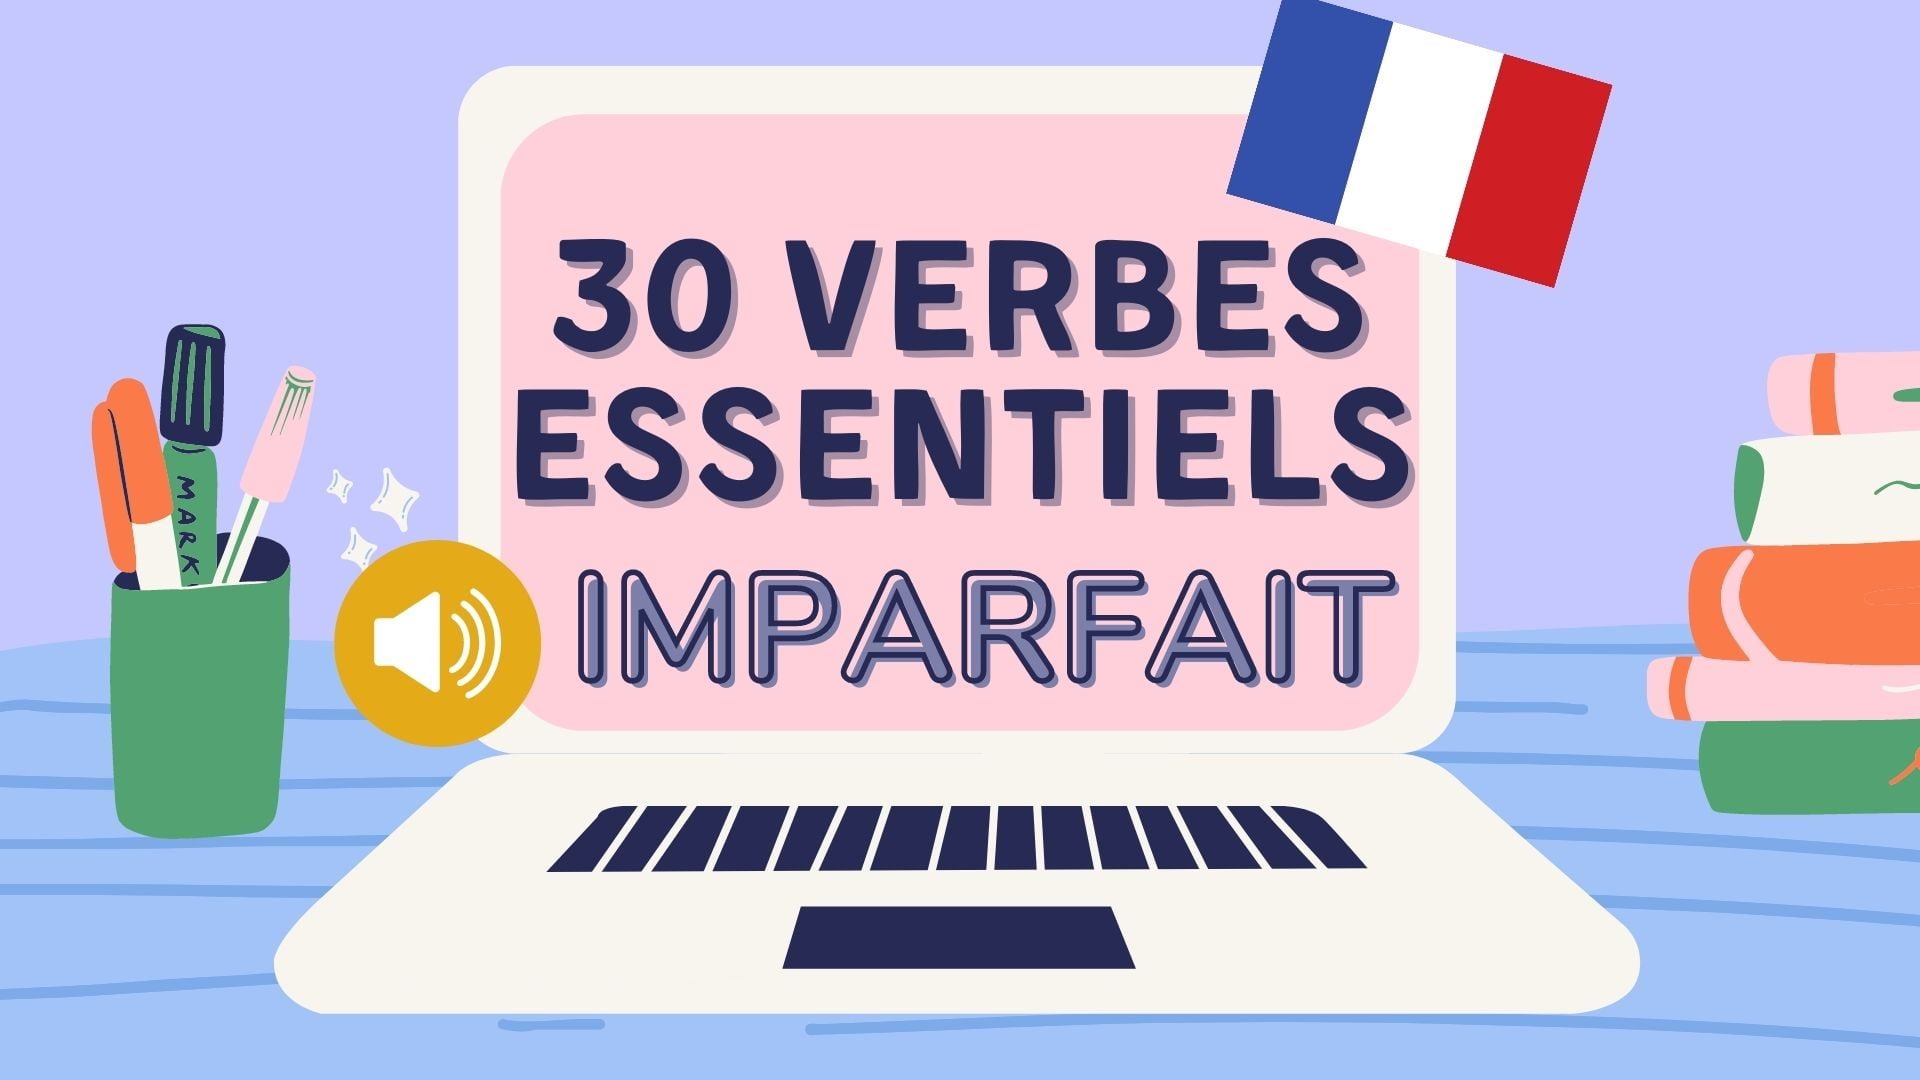 30 essential french verbs in imparfait